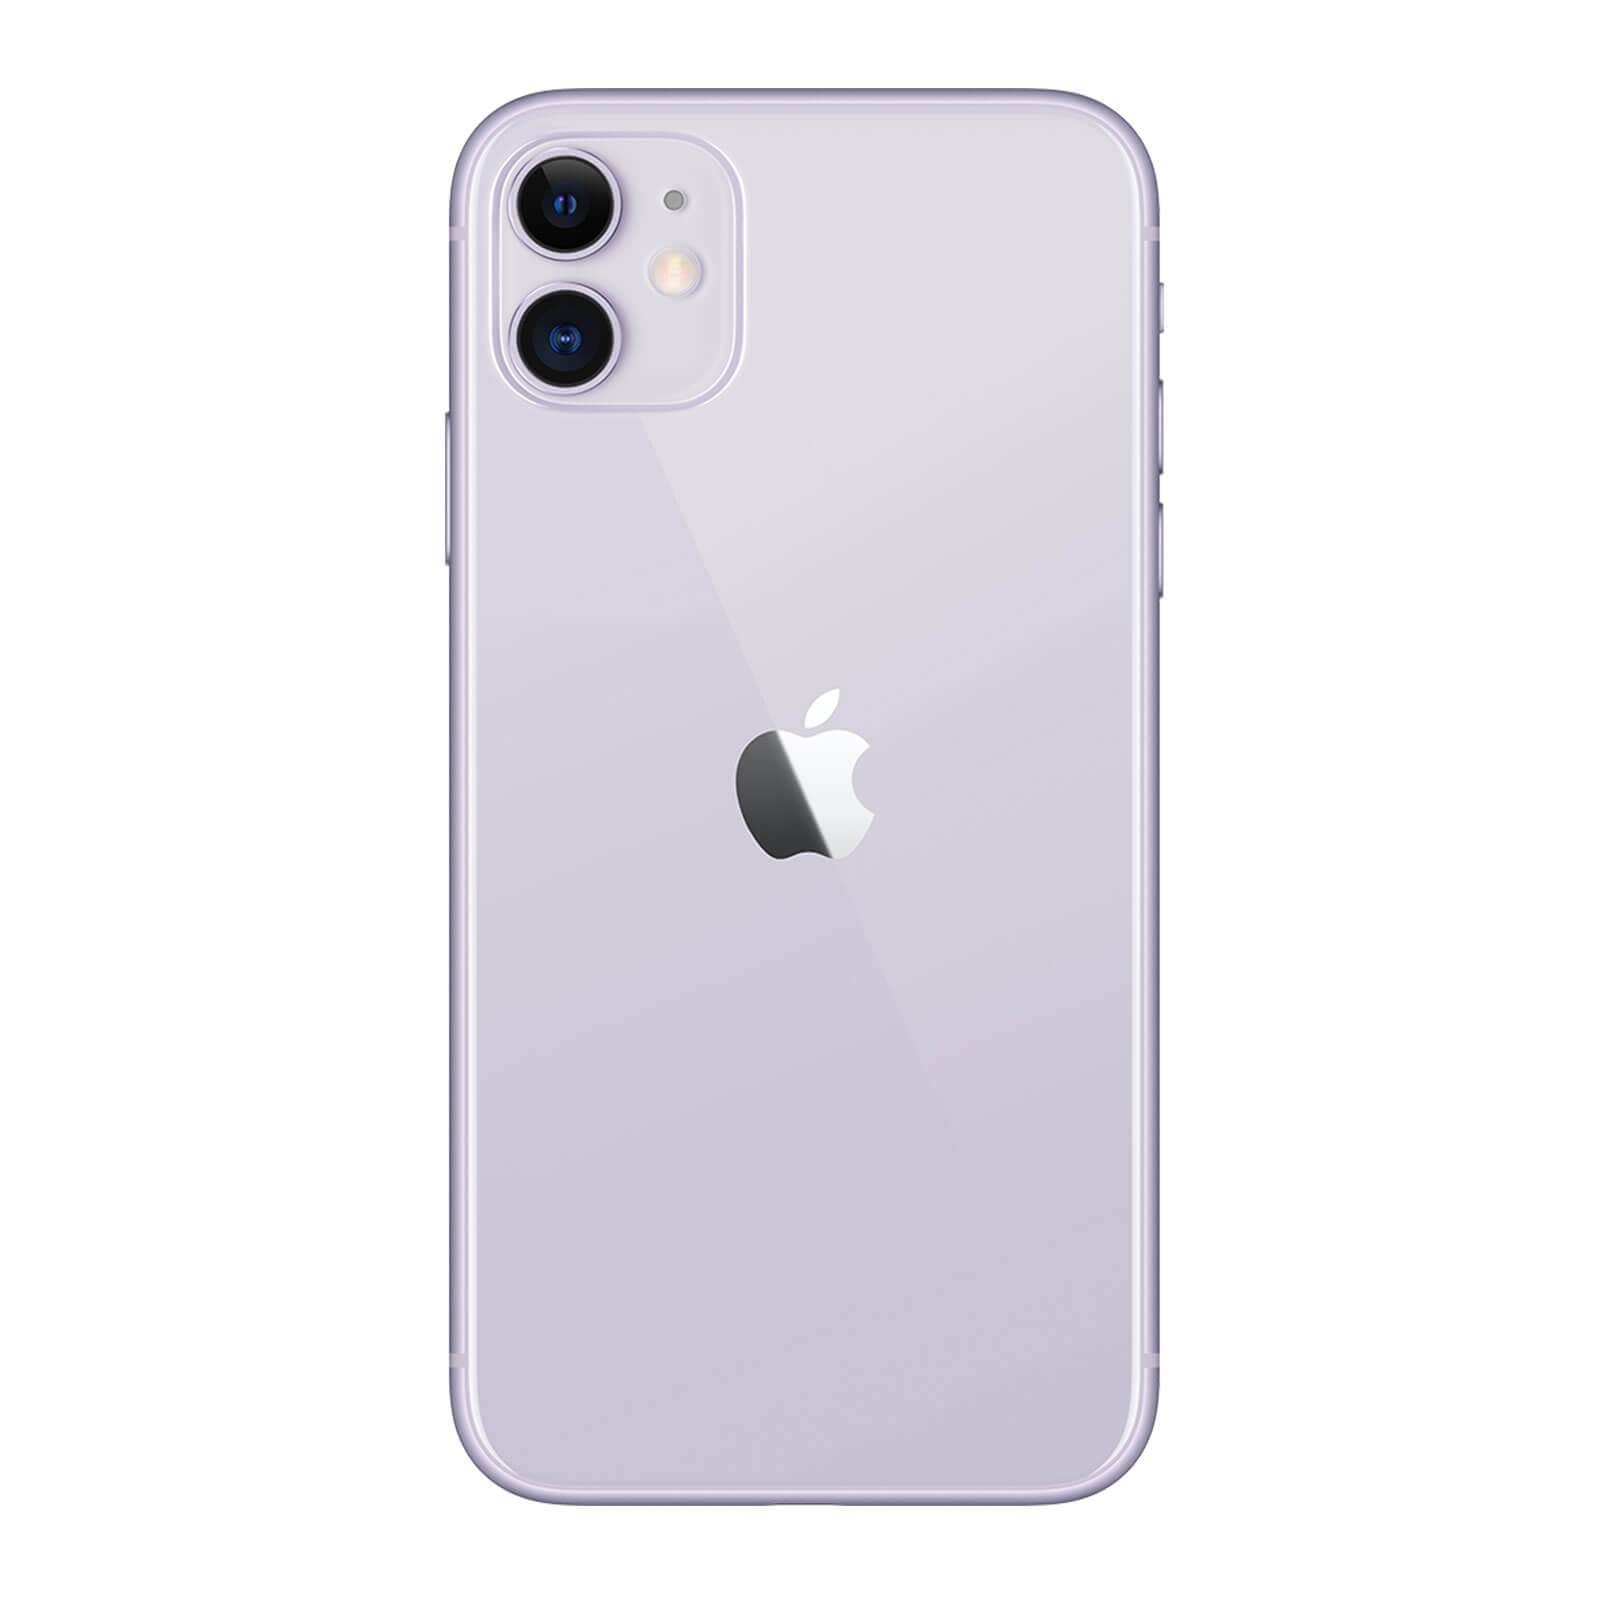 Apple iPhone 11 256GB Purple Very Good - Unlocked